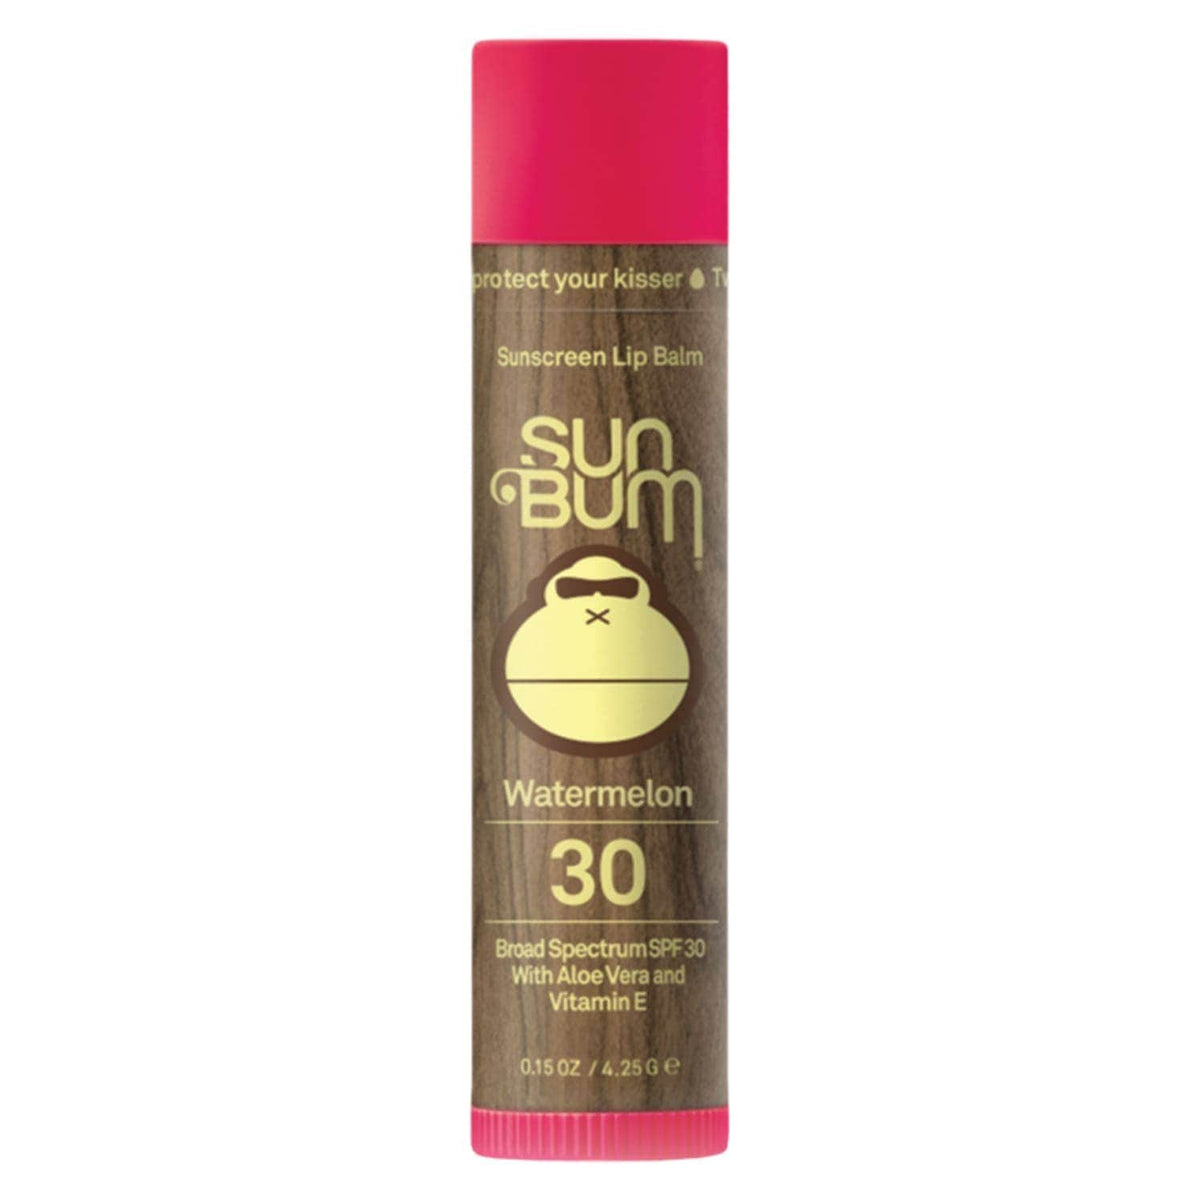 Sun Bum Original SPF 30 Sunscreen Lip Balm - Watermelon - Sunscreen by Sun Bum 4.25g